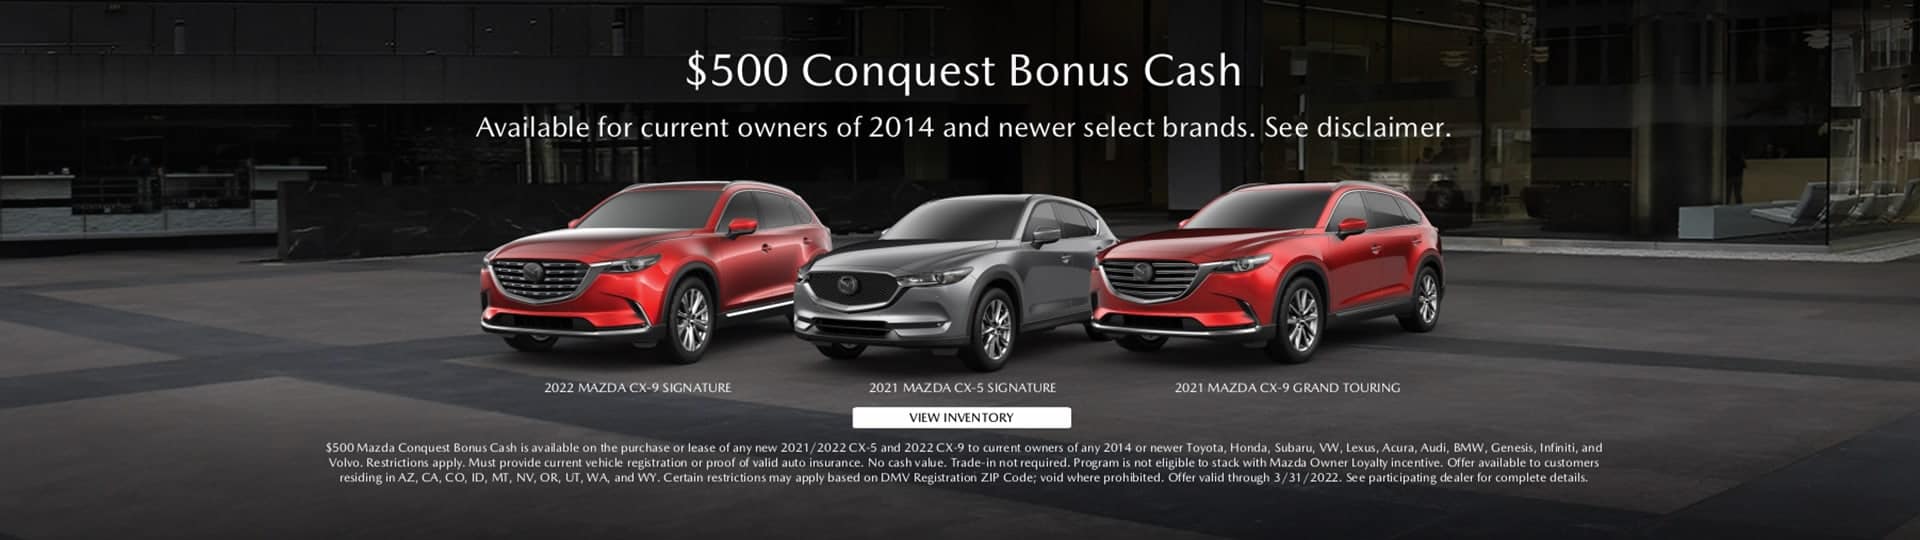 2022 Mazda CX-5 and CX-9 $500 Conquest Bonus Cash